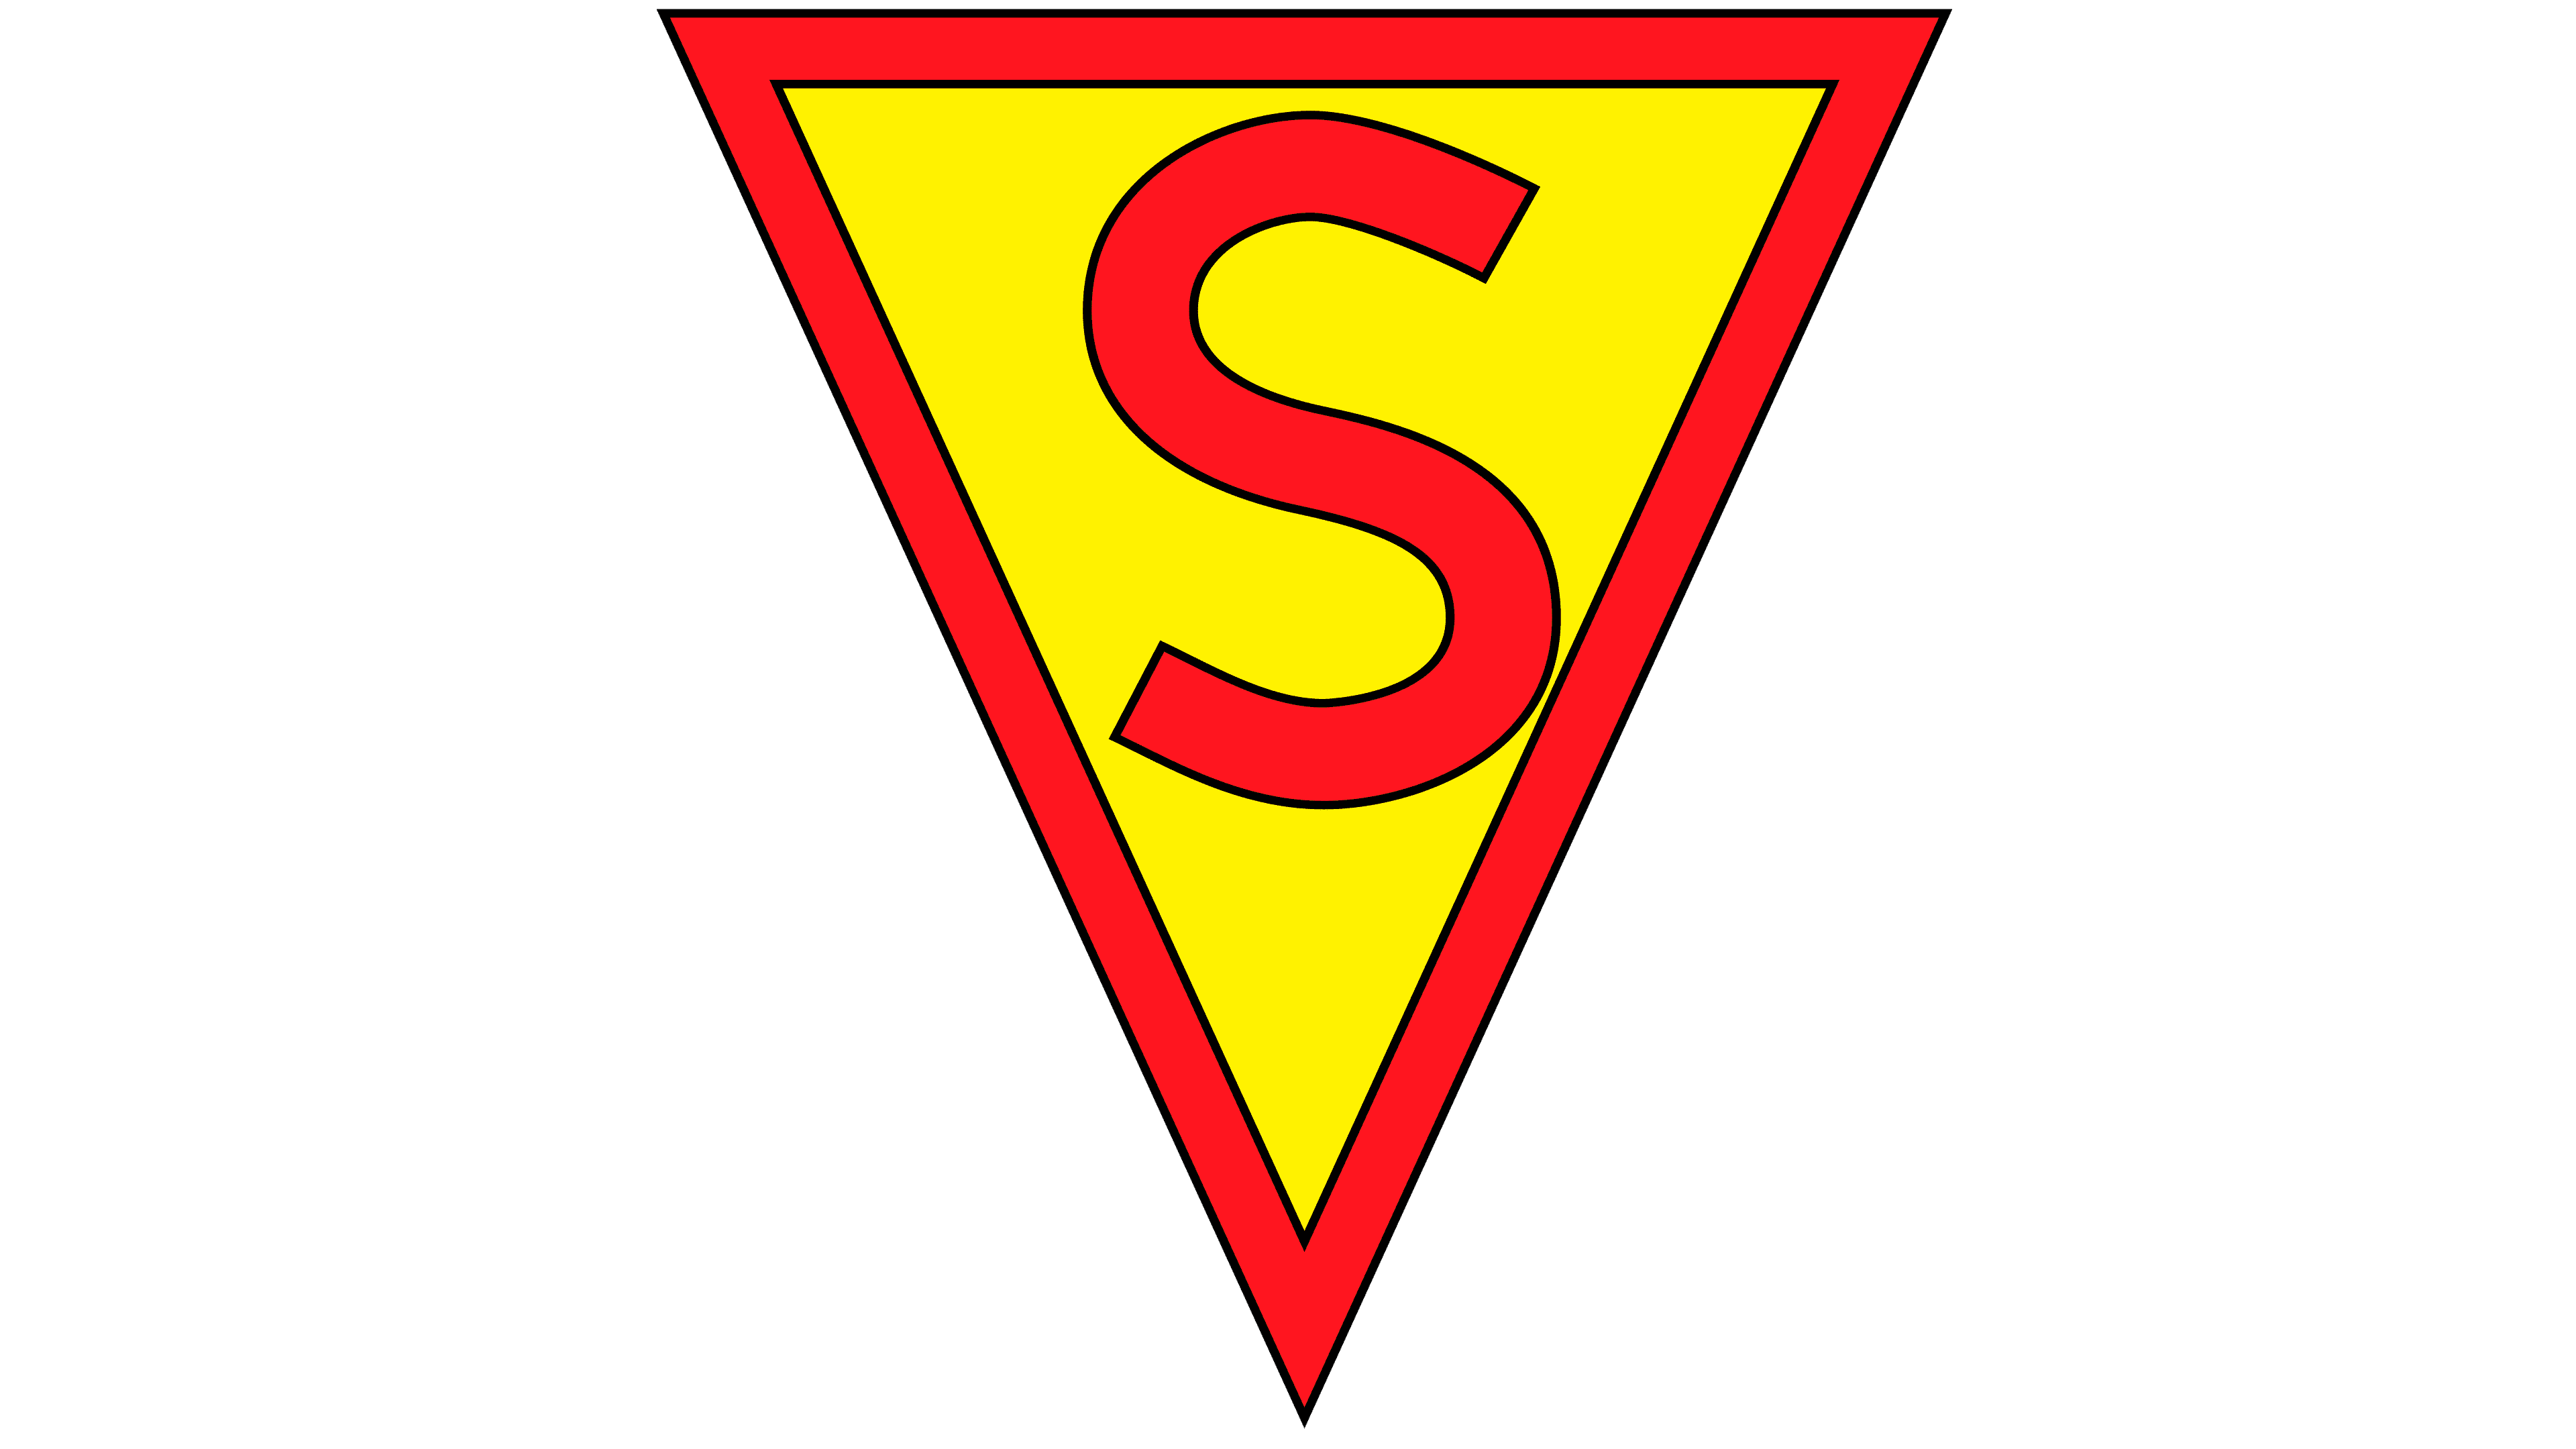 superman logo nail art